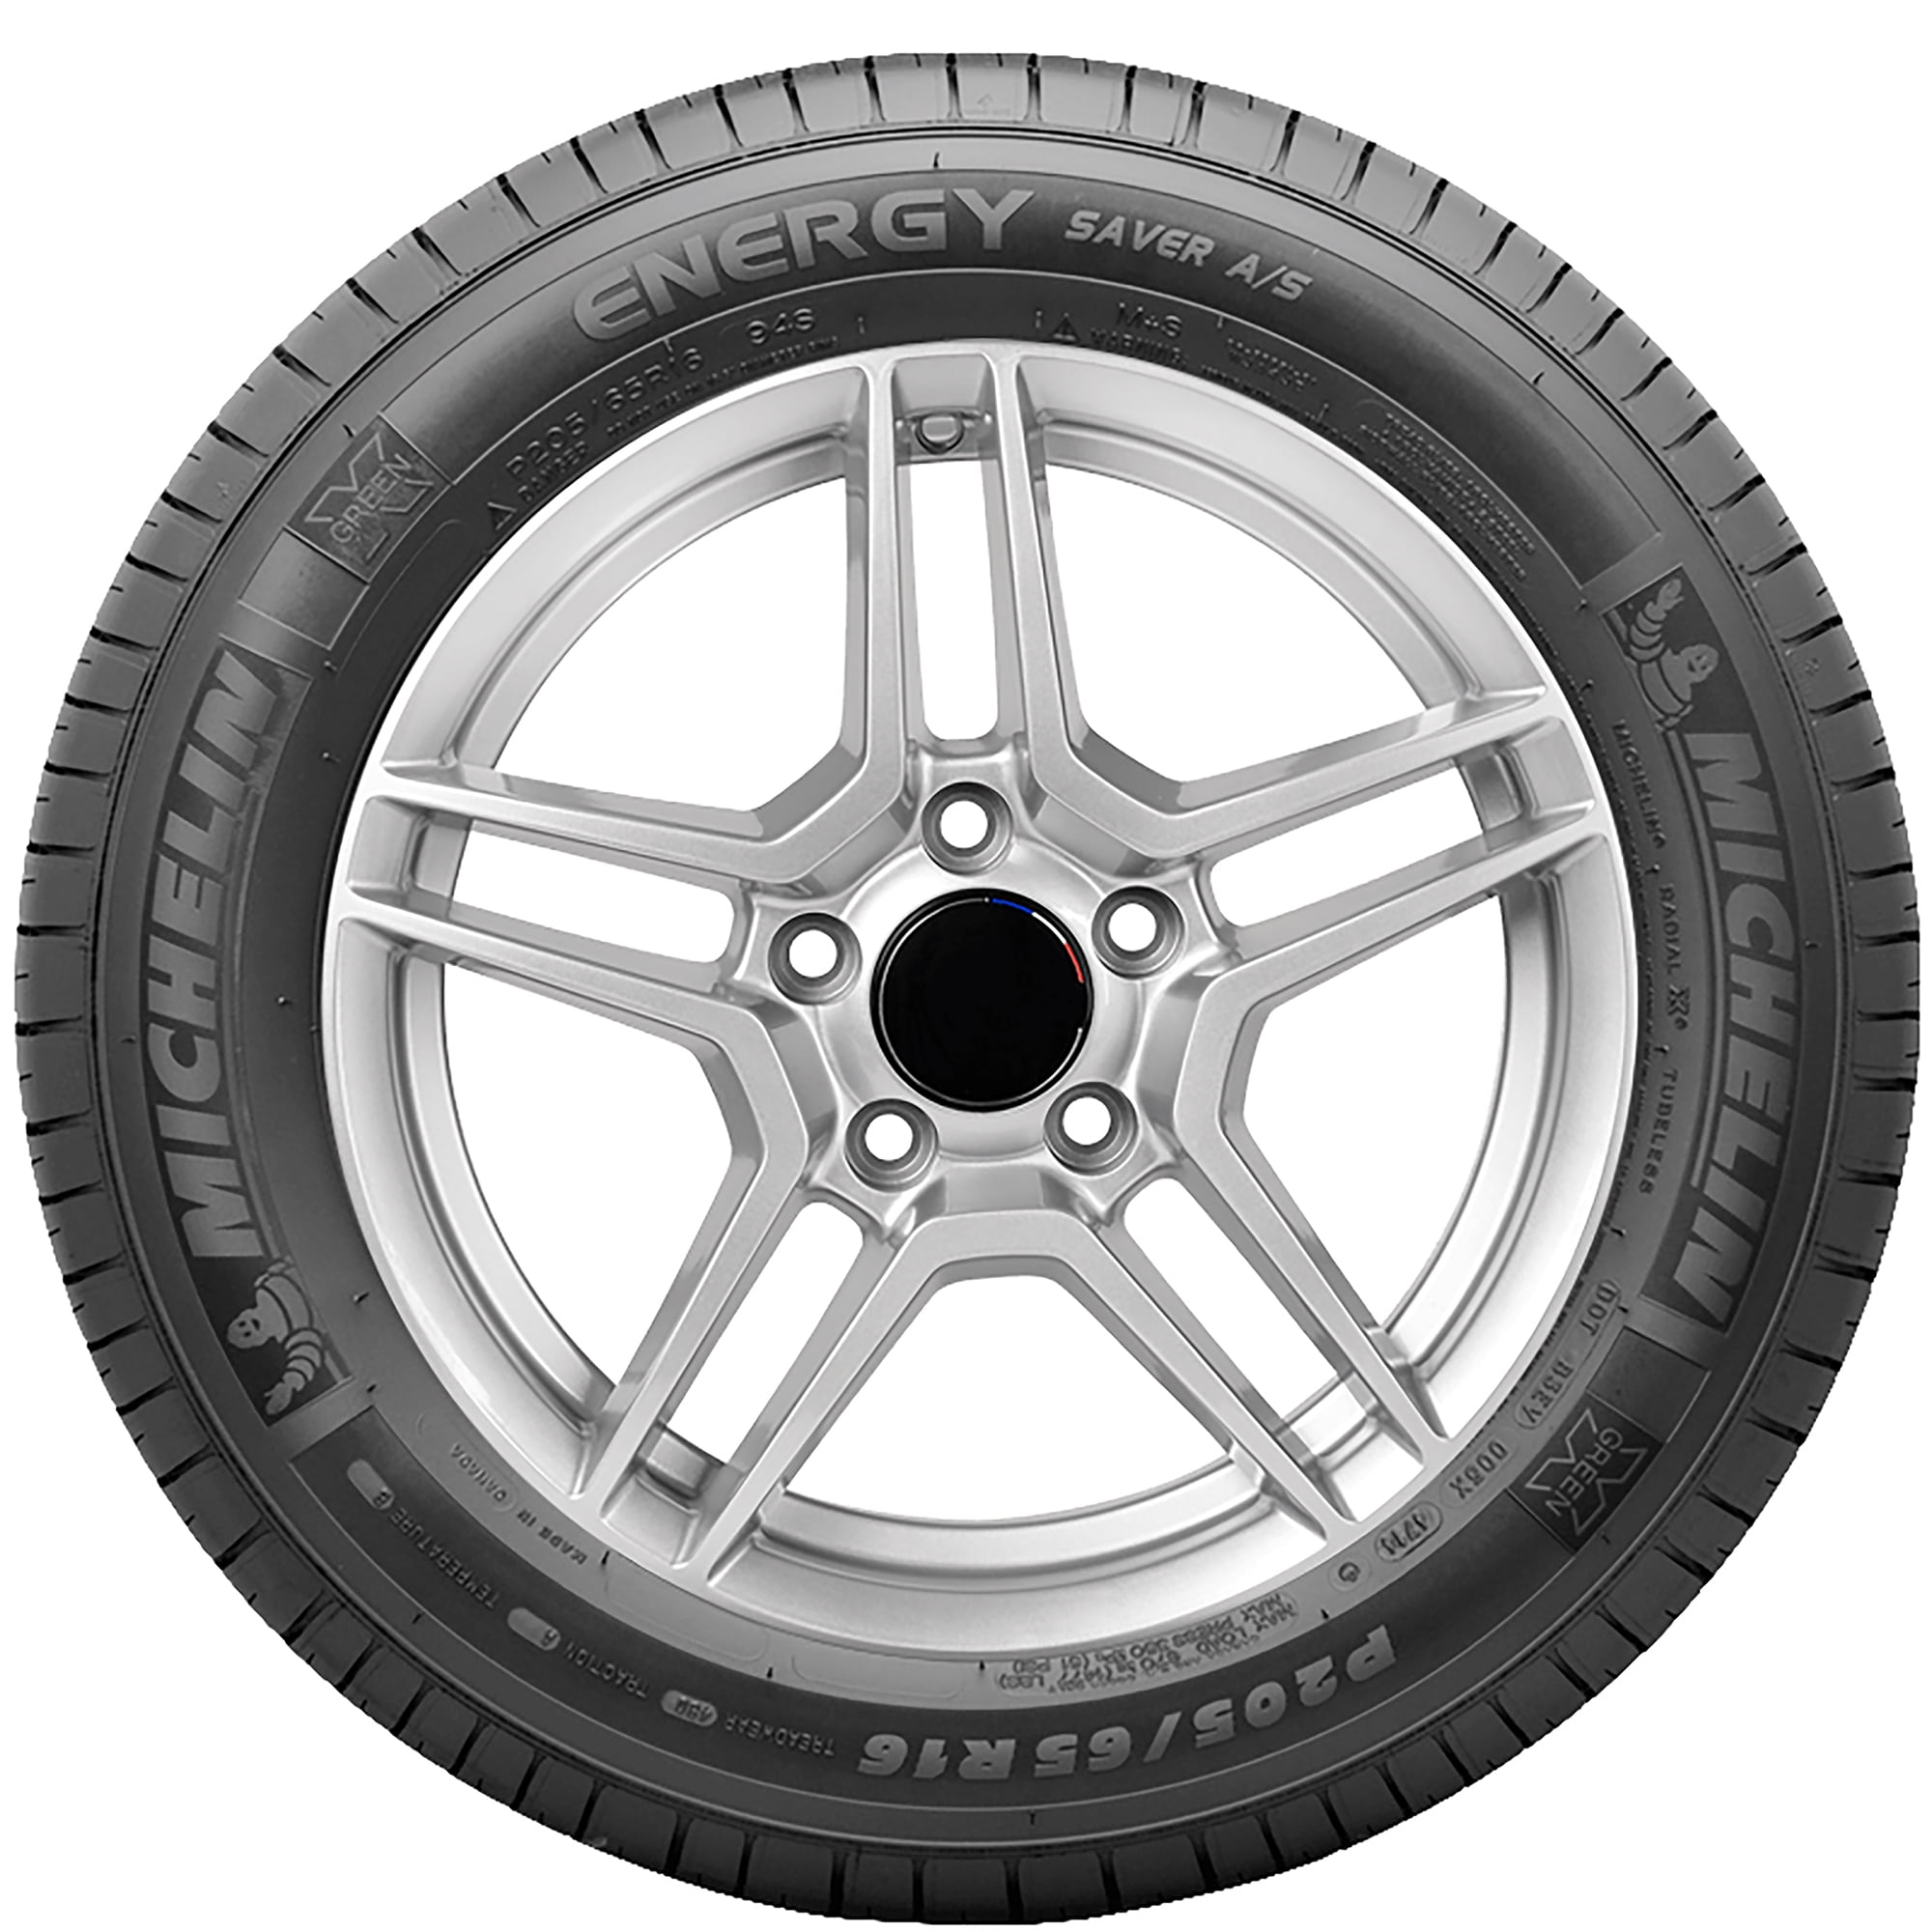 Michelin Energy Saver All Season 215/50-17 91 H Tire